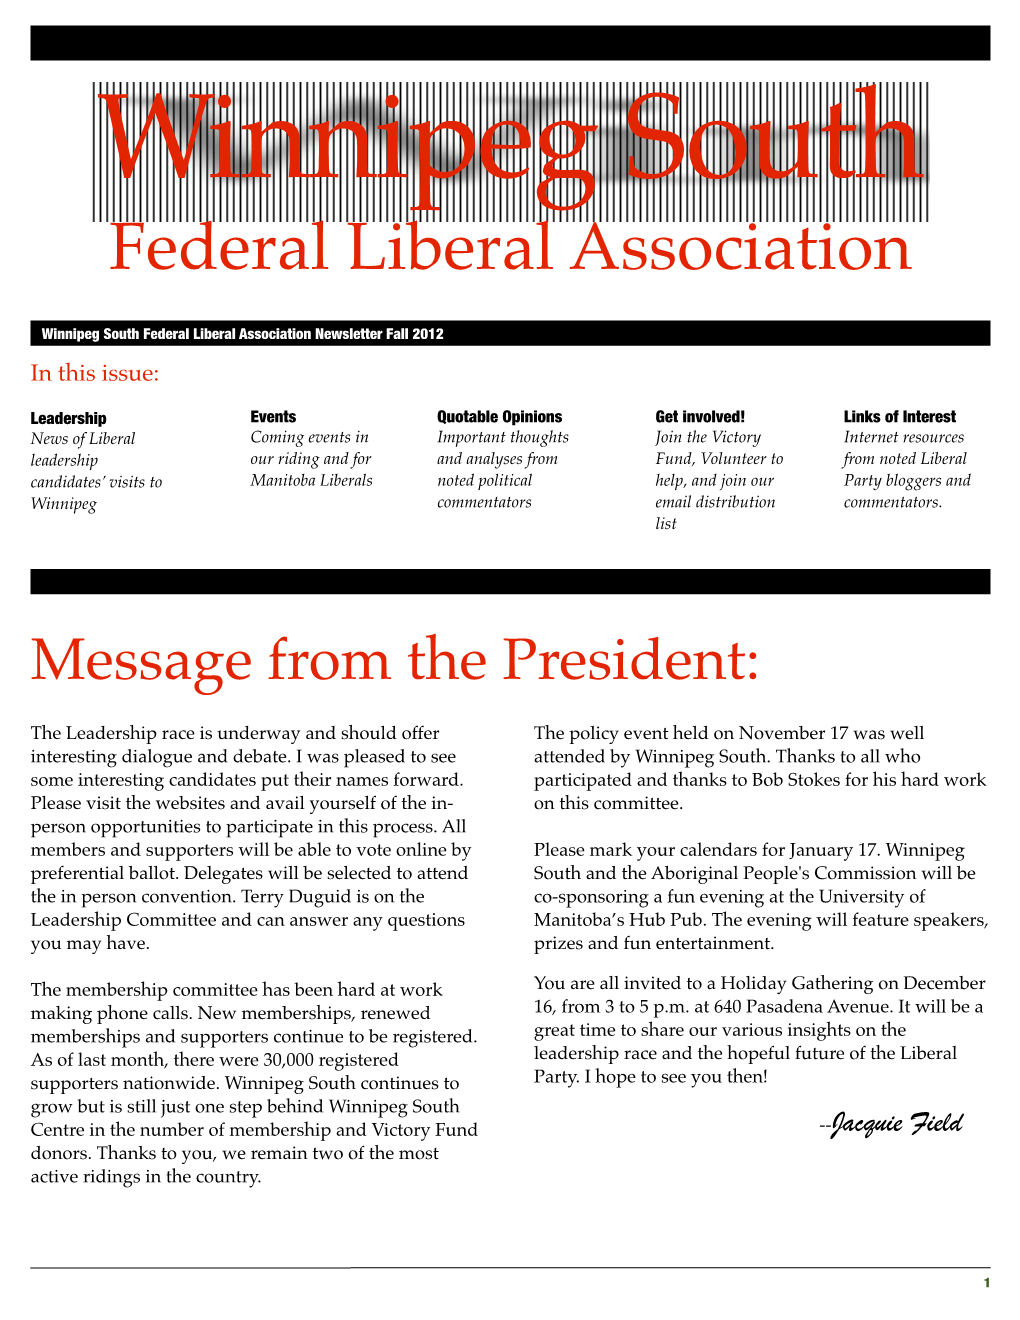 Federal Liberal Association